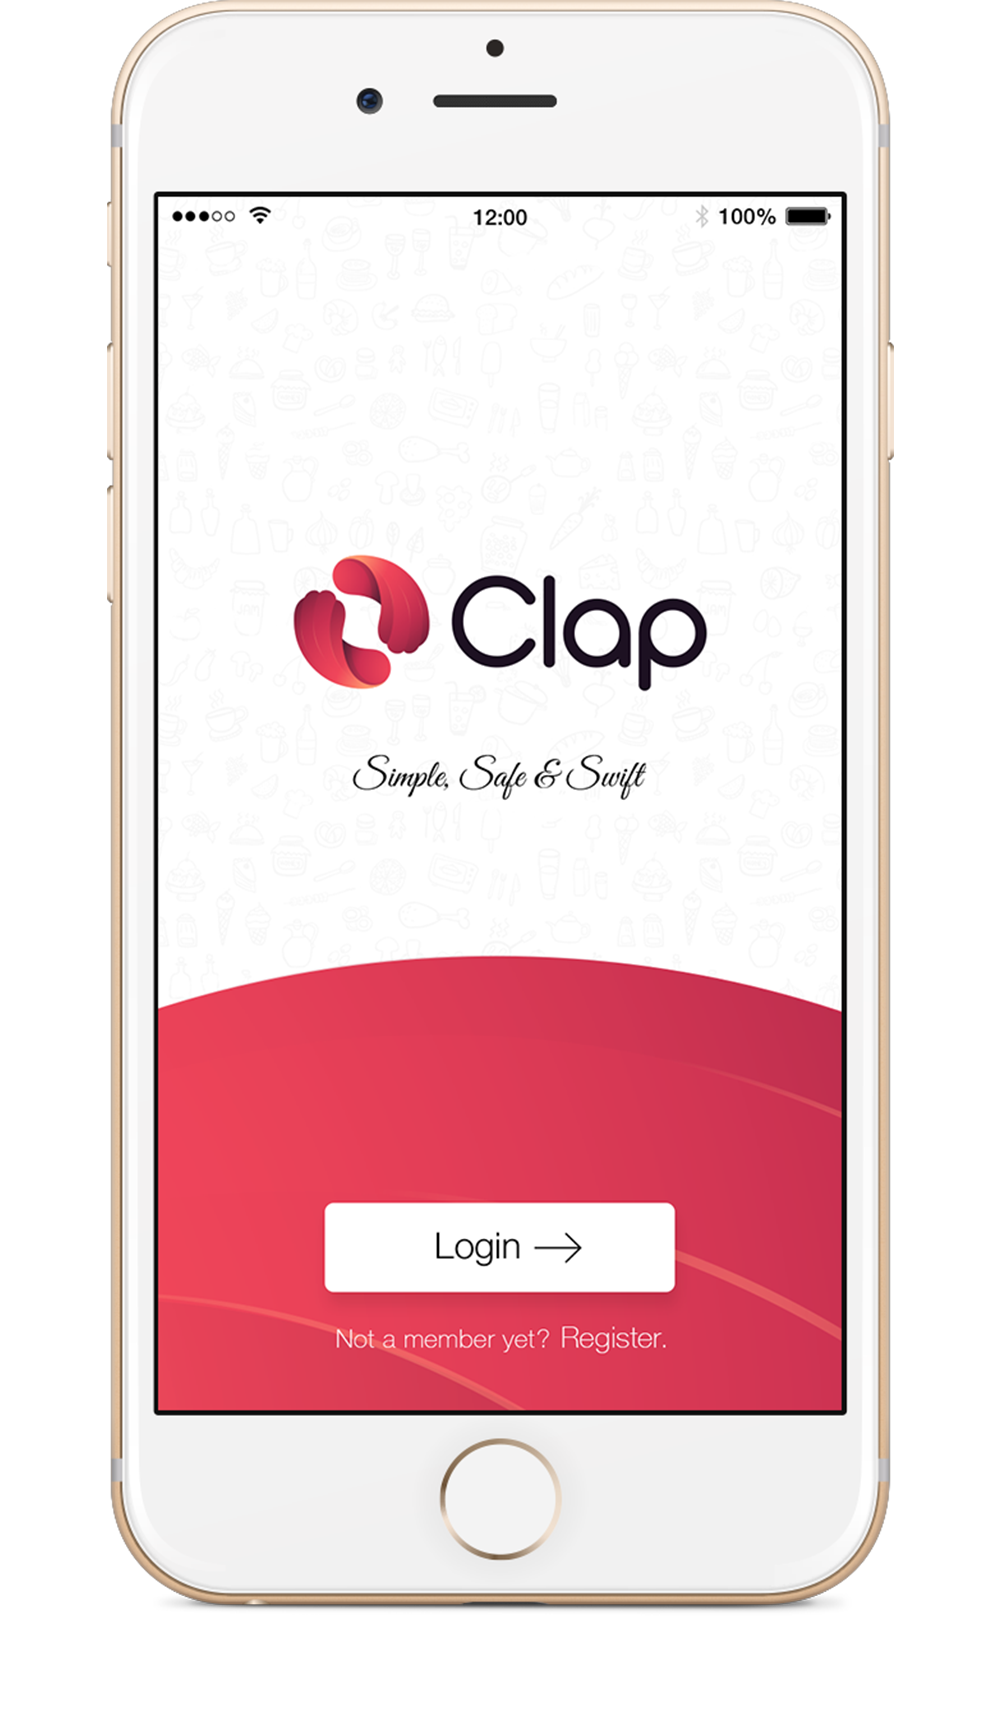 Clap - Simple Safe & Swift